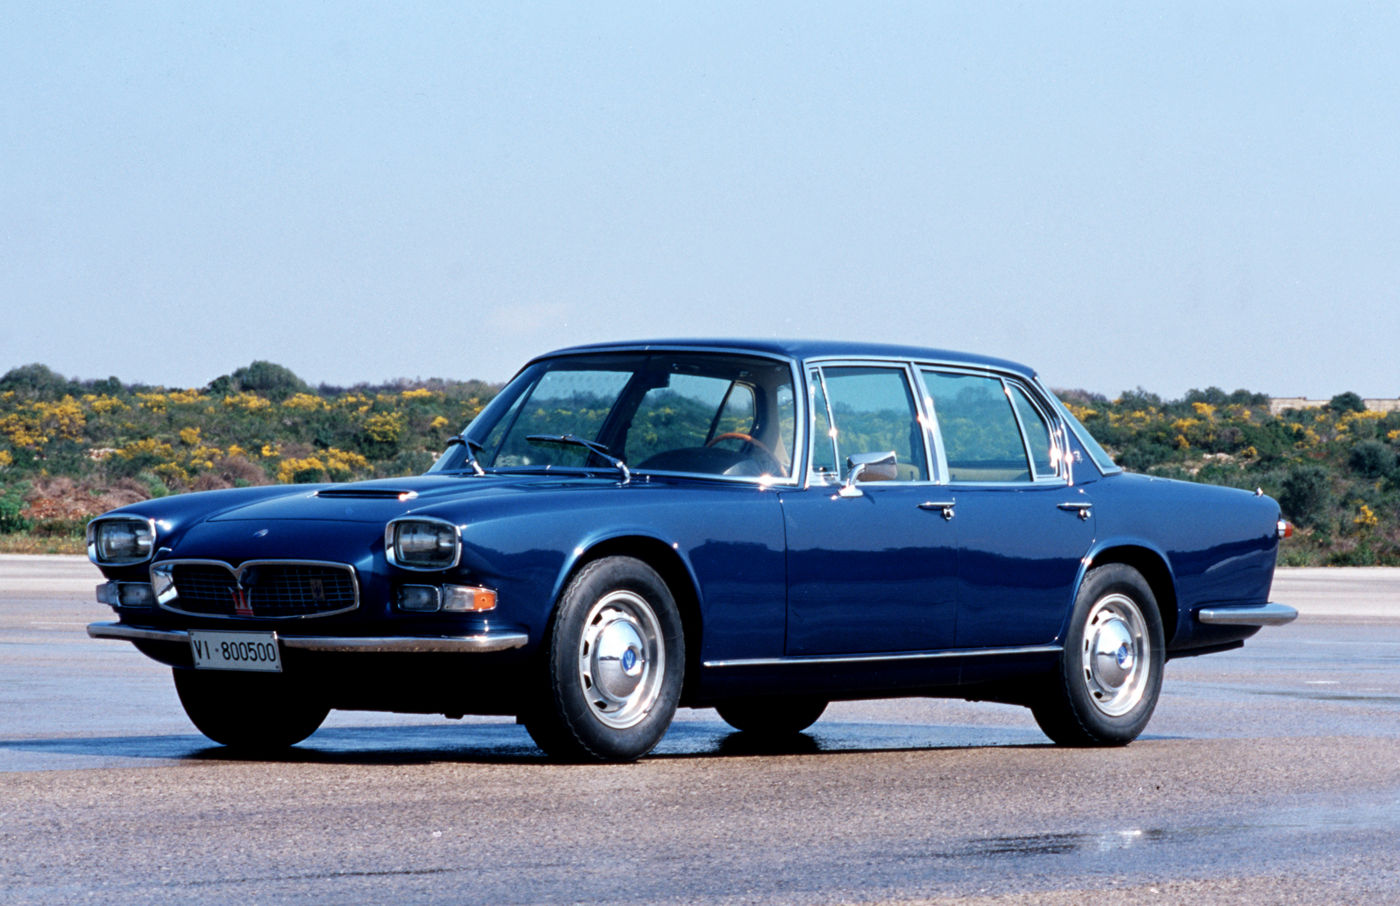 1964-1966 Maserati Quattroporte I - the classic sports car model in blue